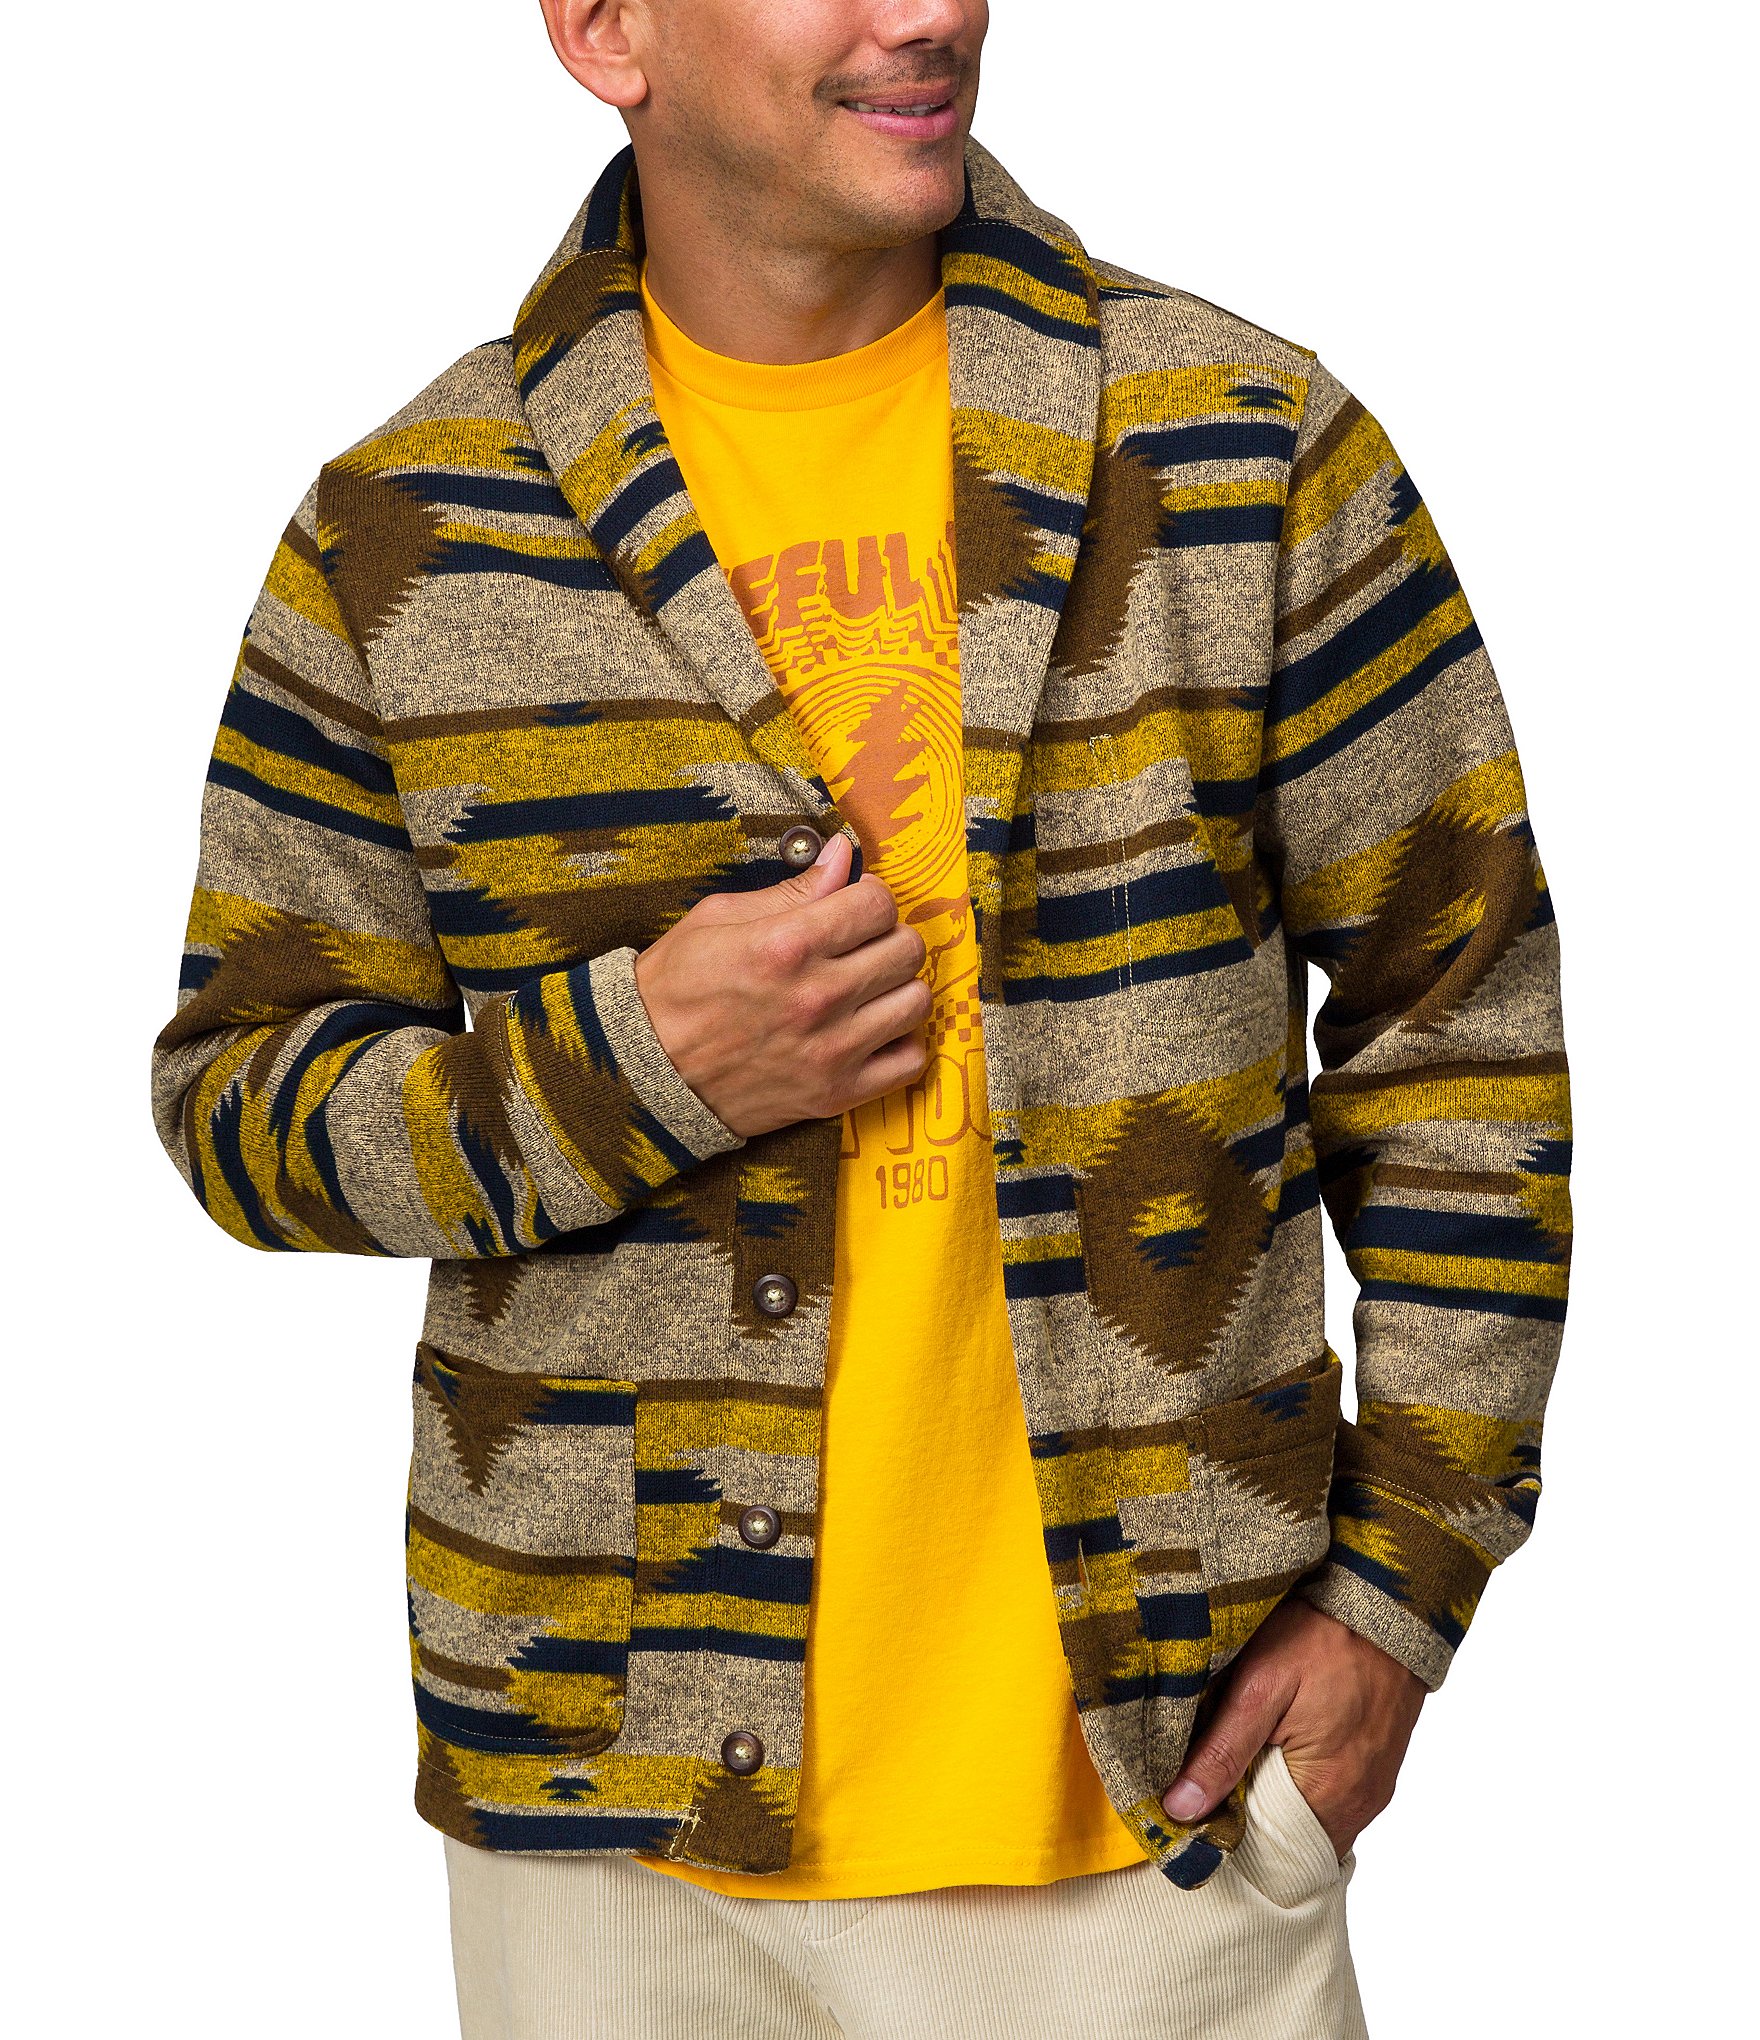 VerPetridure Clearance 2023 Men's Shawl Collar Cardigan Sweater